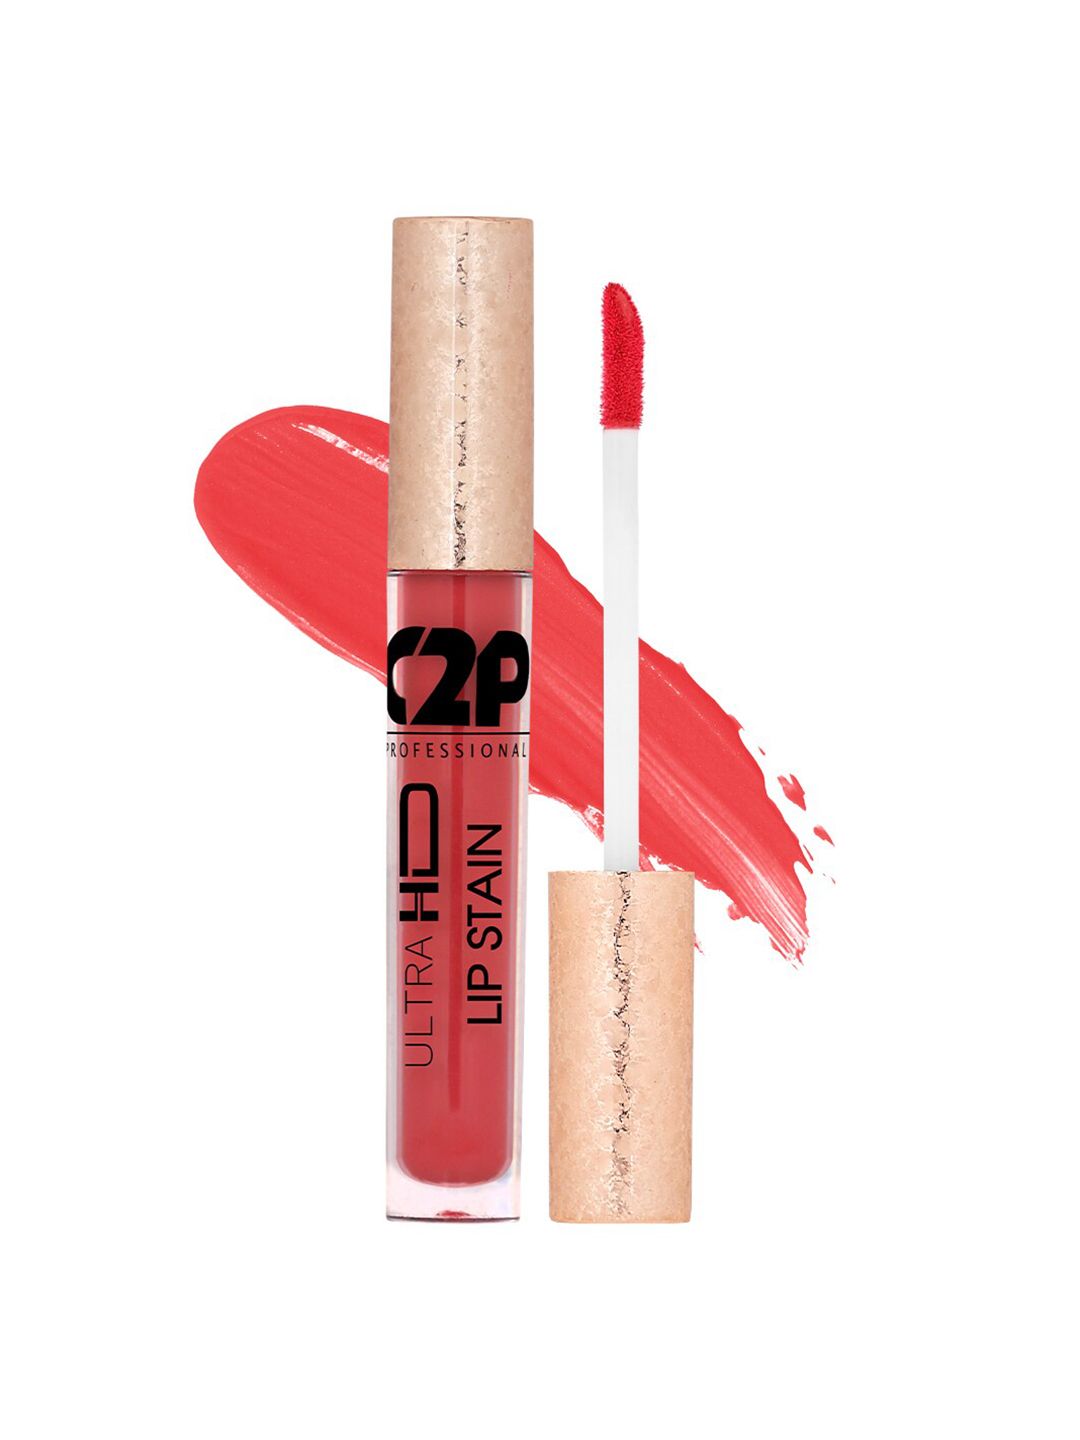 C2P PROFESSIONAL MAKEUP Lip Stain Liquid Lipstick - Nude Glaze 23 5 ml Price in India